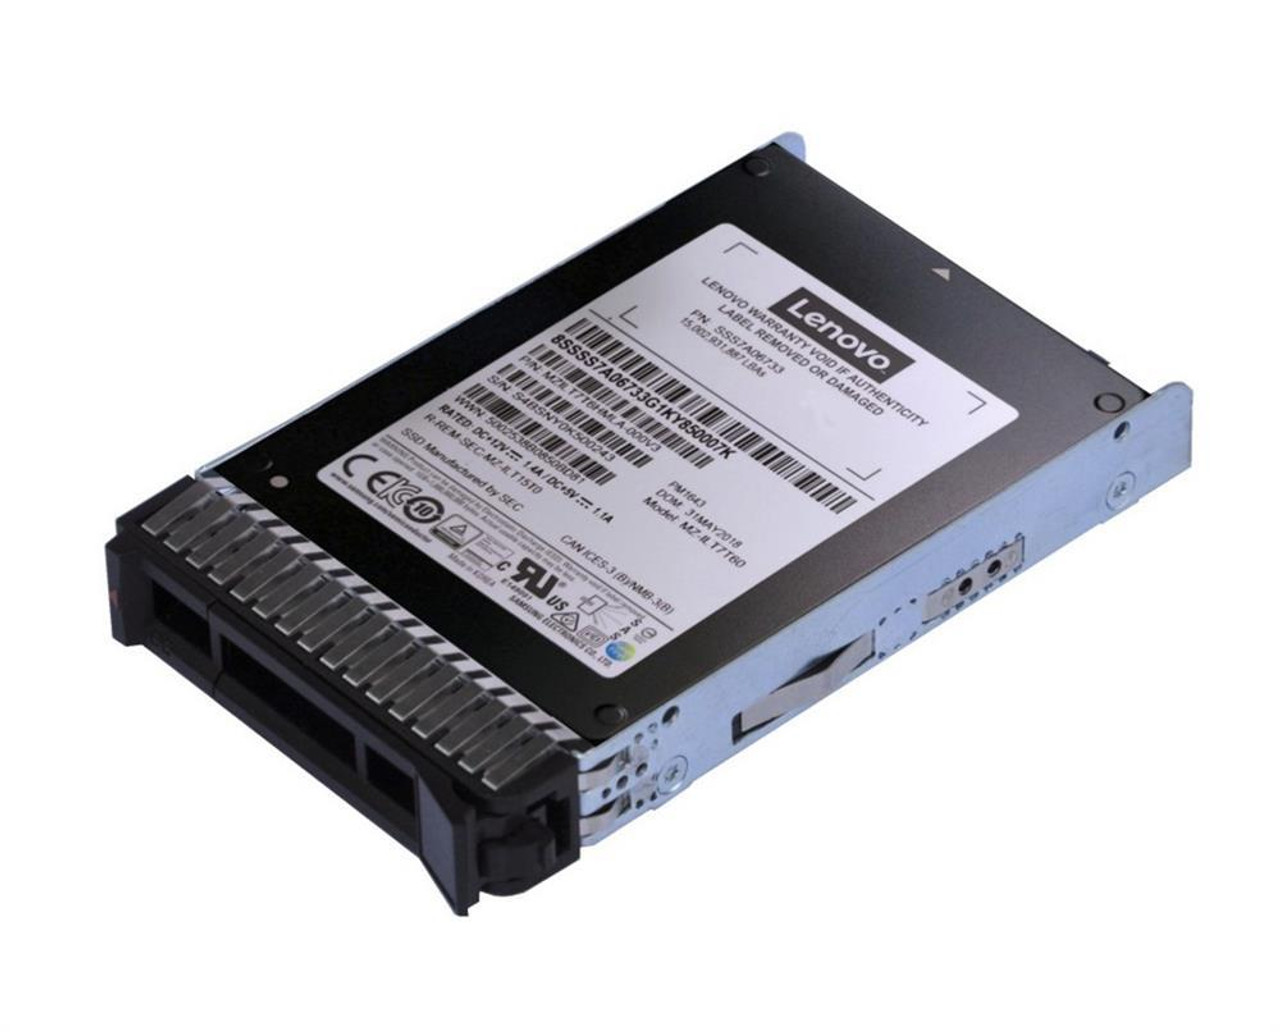 01PG652 Lenovo 3.84TB SAS 12Gbps 1DWPD HS 2.5-inch Internal Solid State Drive (SSD)